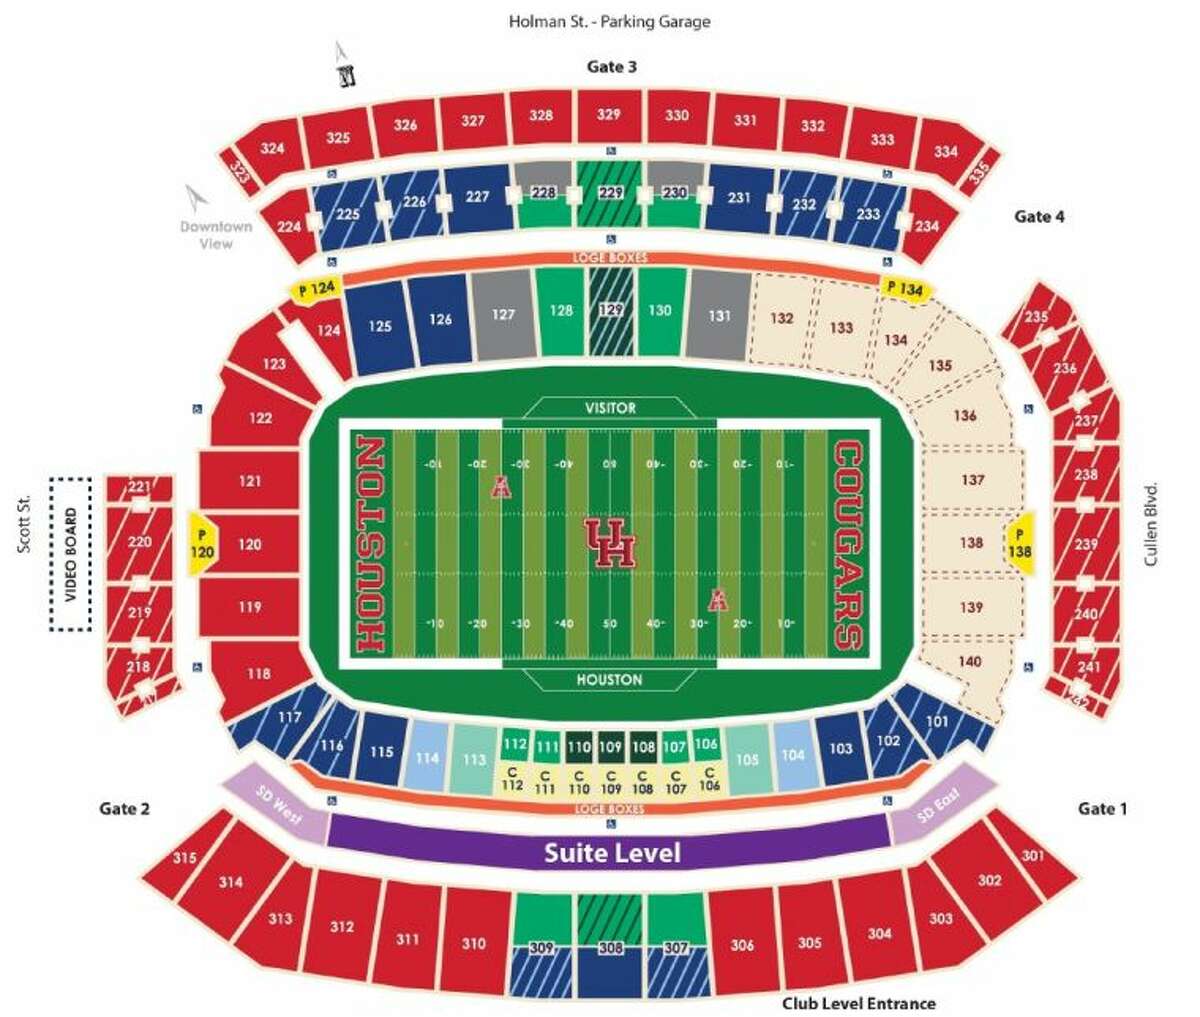 The stadium seating diagram for the University of Houston's new footba...